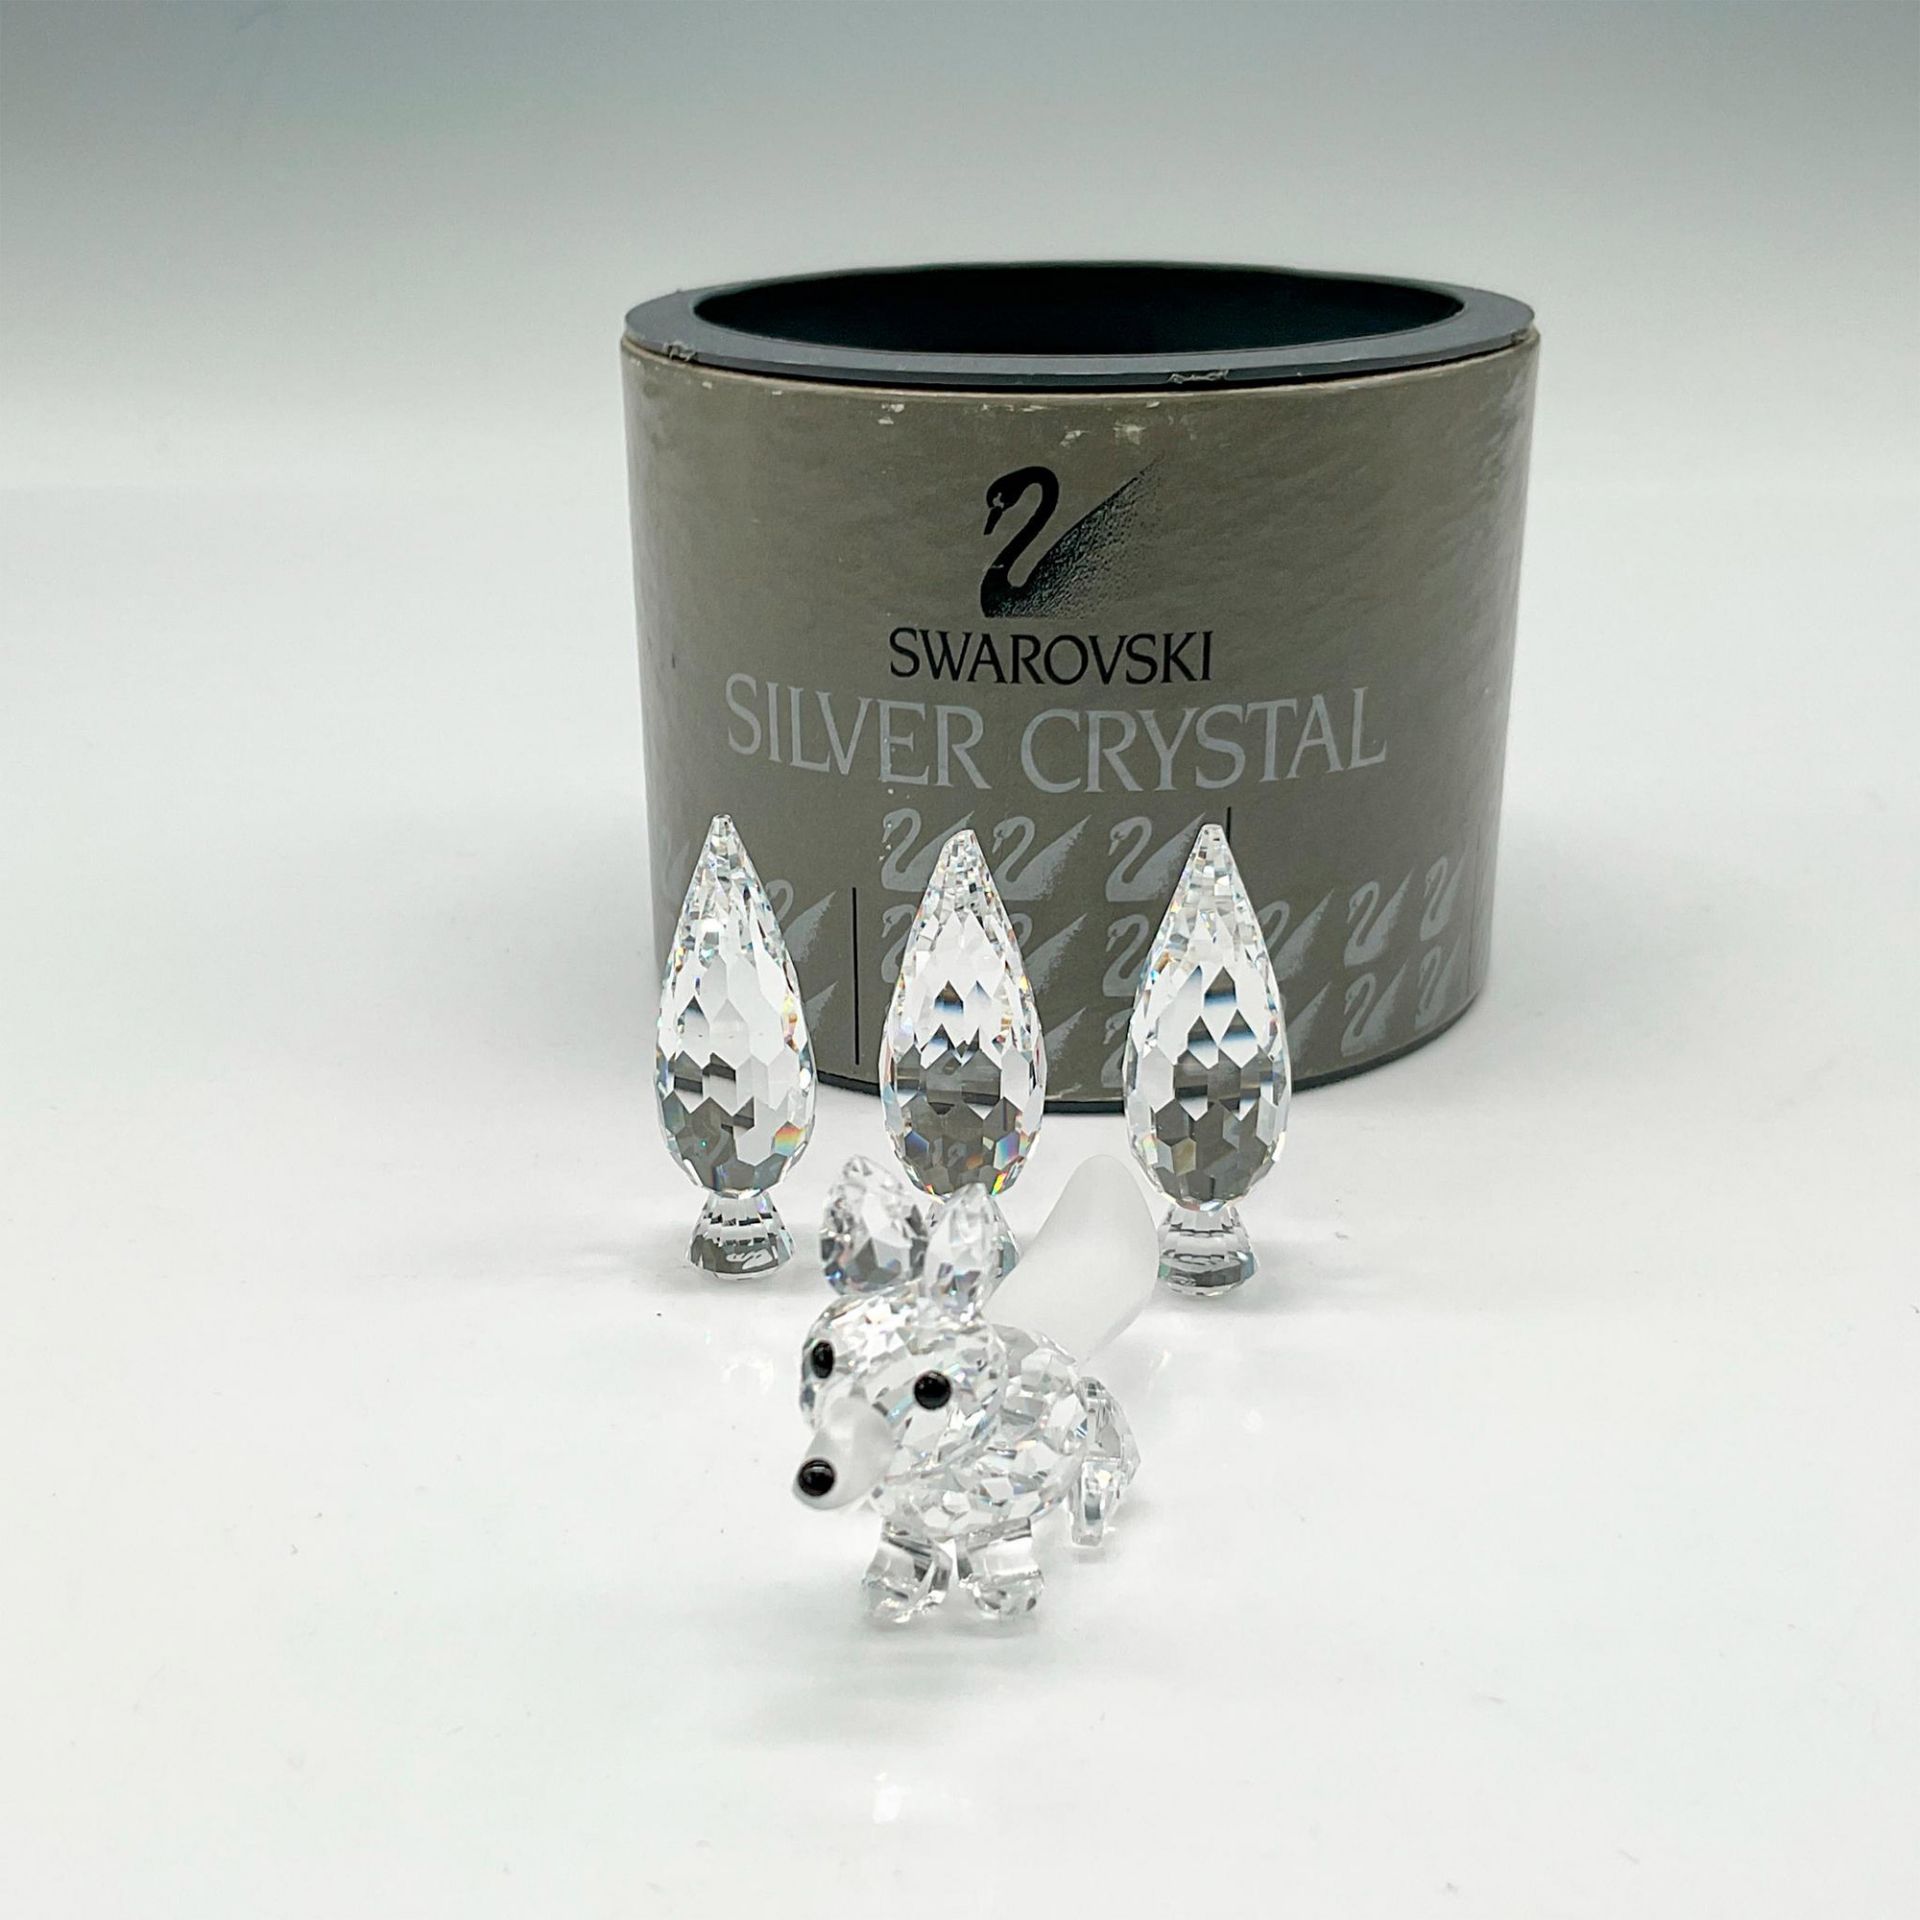 Swarovski Silver Crystal Figurines, Fox + Poplar Trees - Image 4 of 4